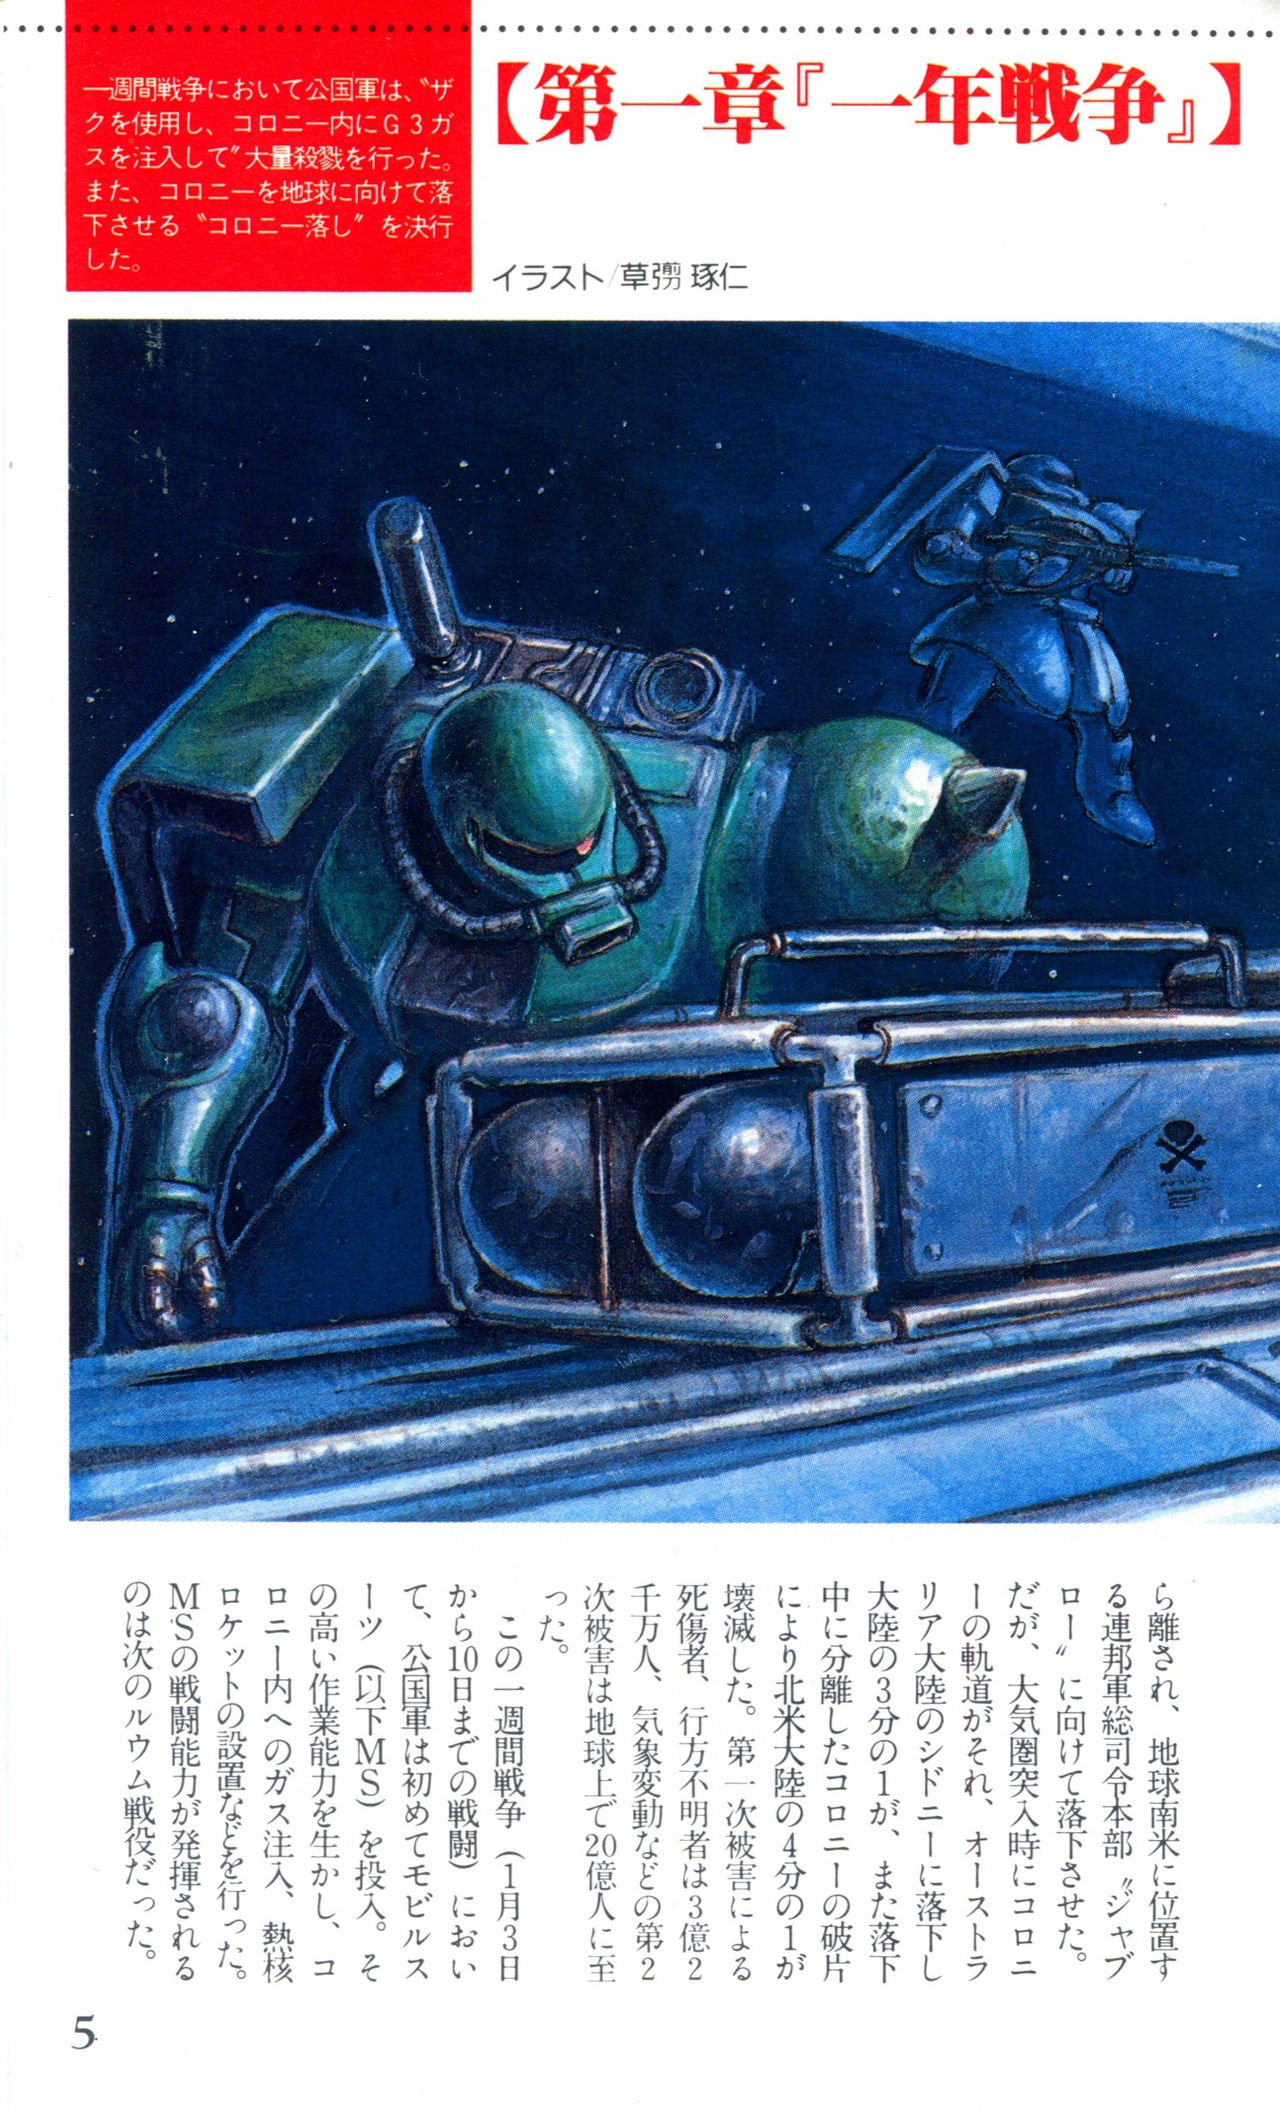 Mobile Suit Gundam U.C. Box MS Gundam Encyclopedia NO.01 - Mobile Suit Gundam 4